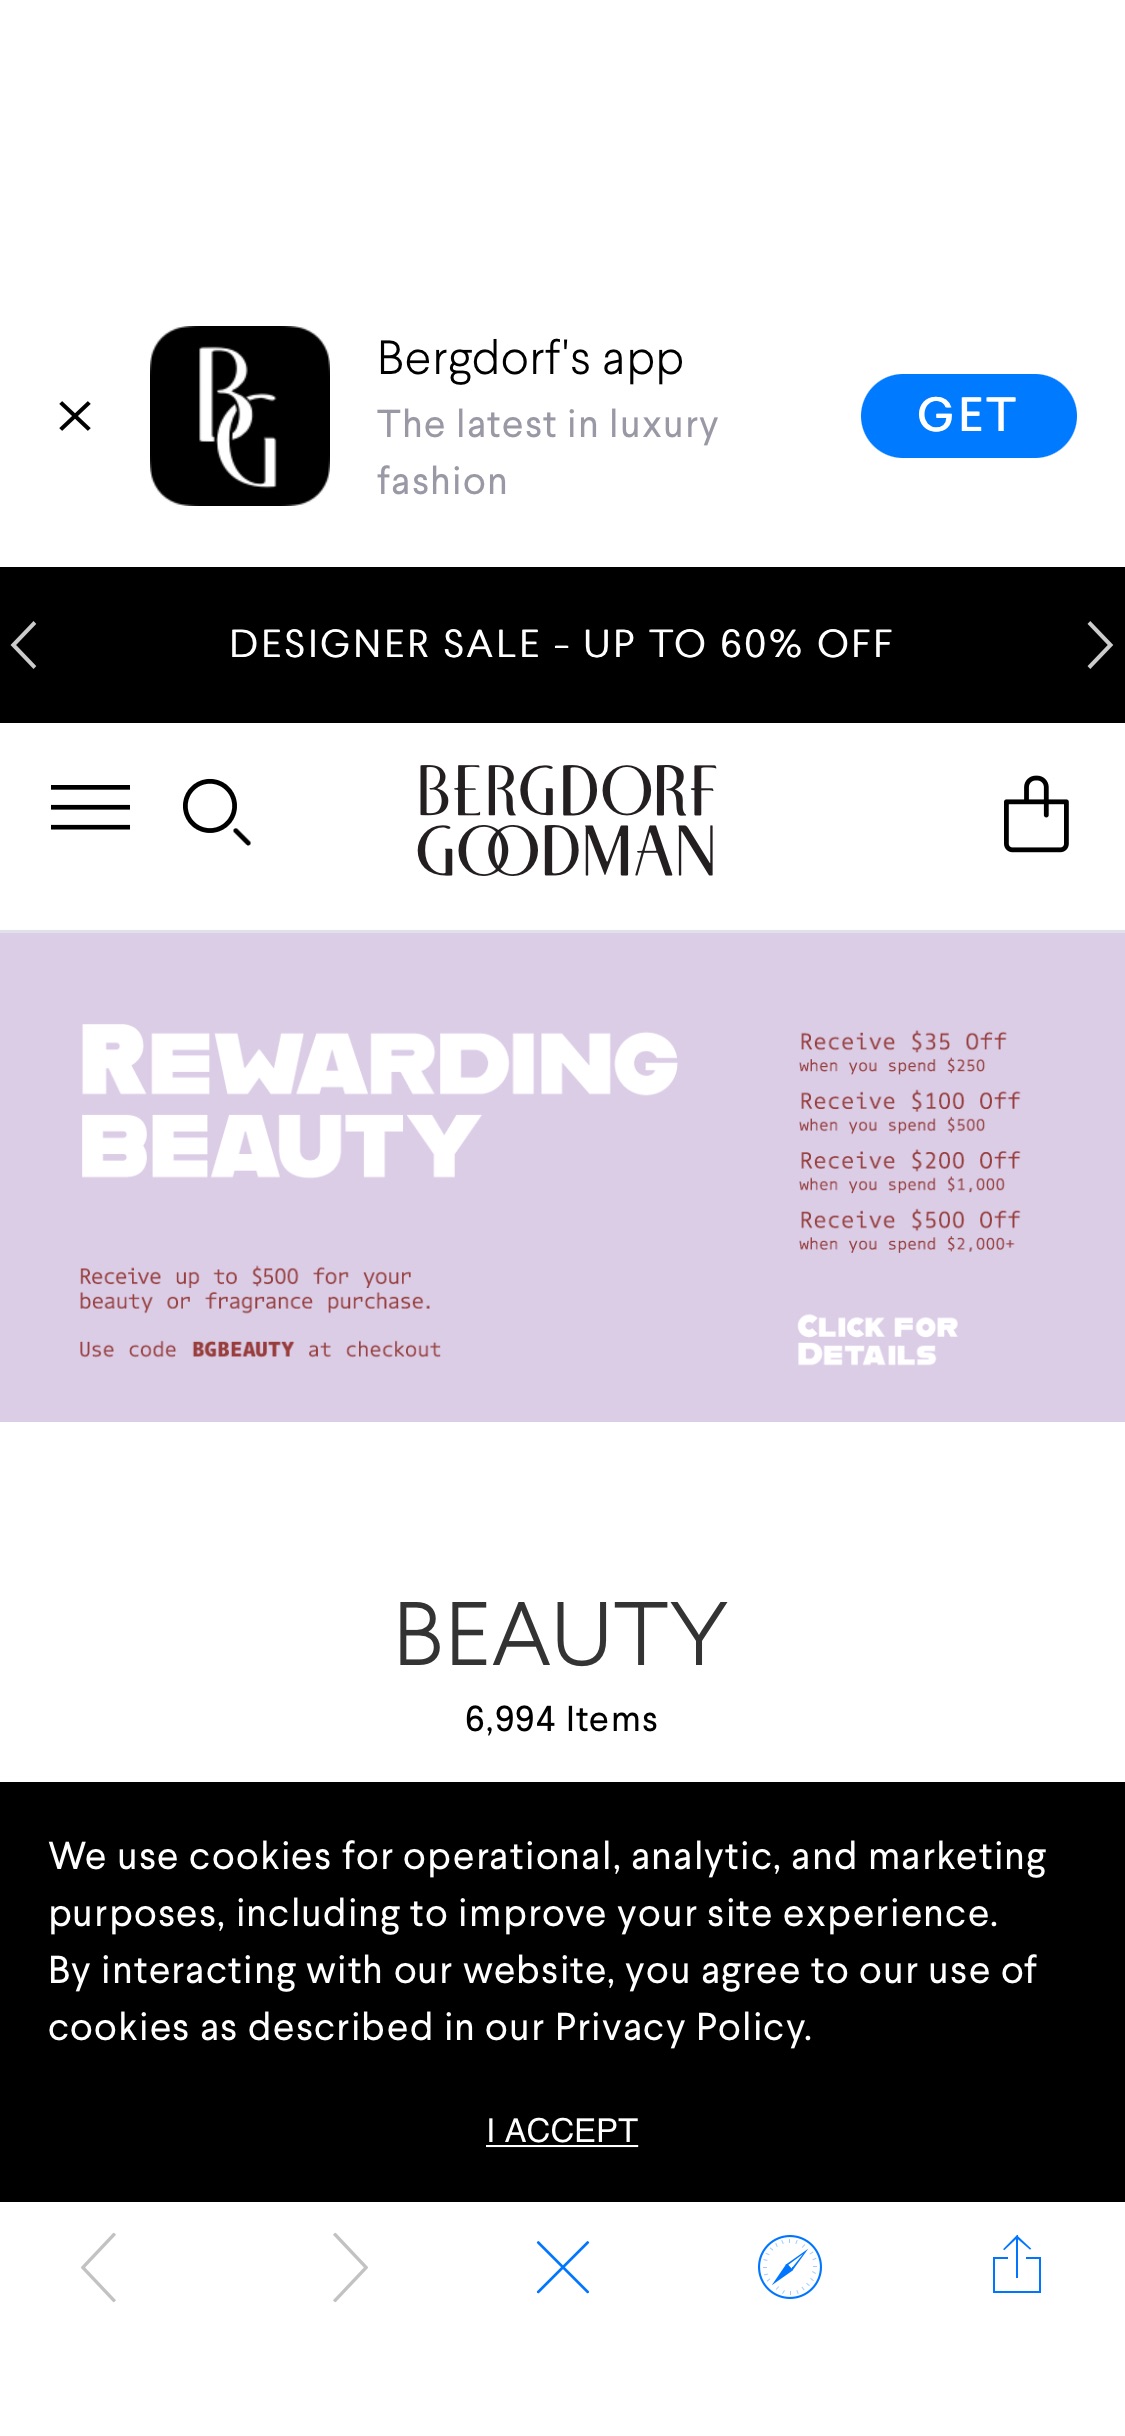 Beauty Products at Bergdorf Goodman
美妆护肤满减活动